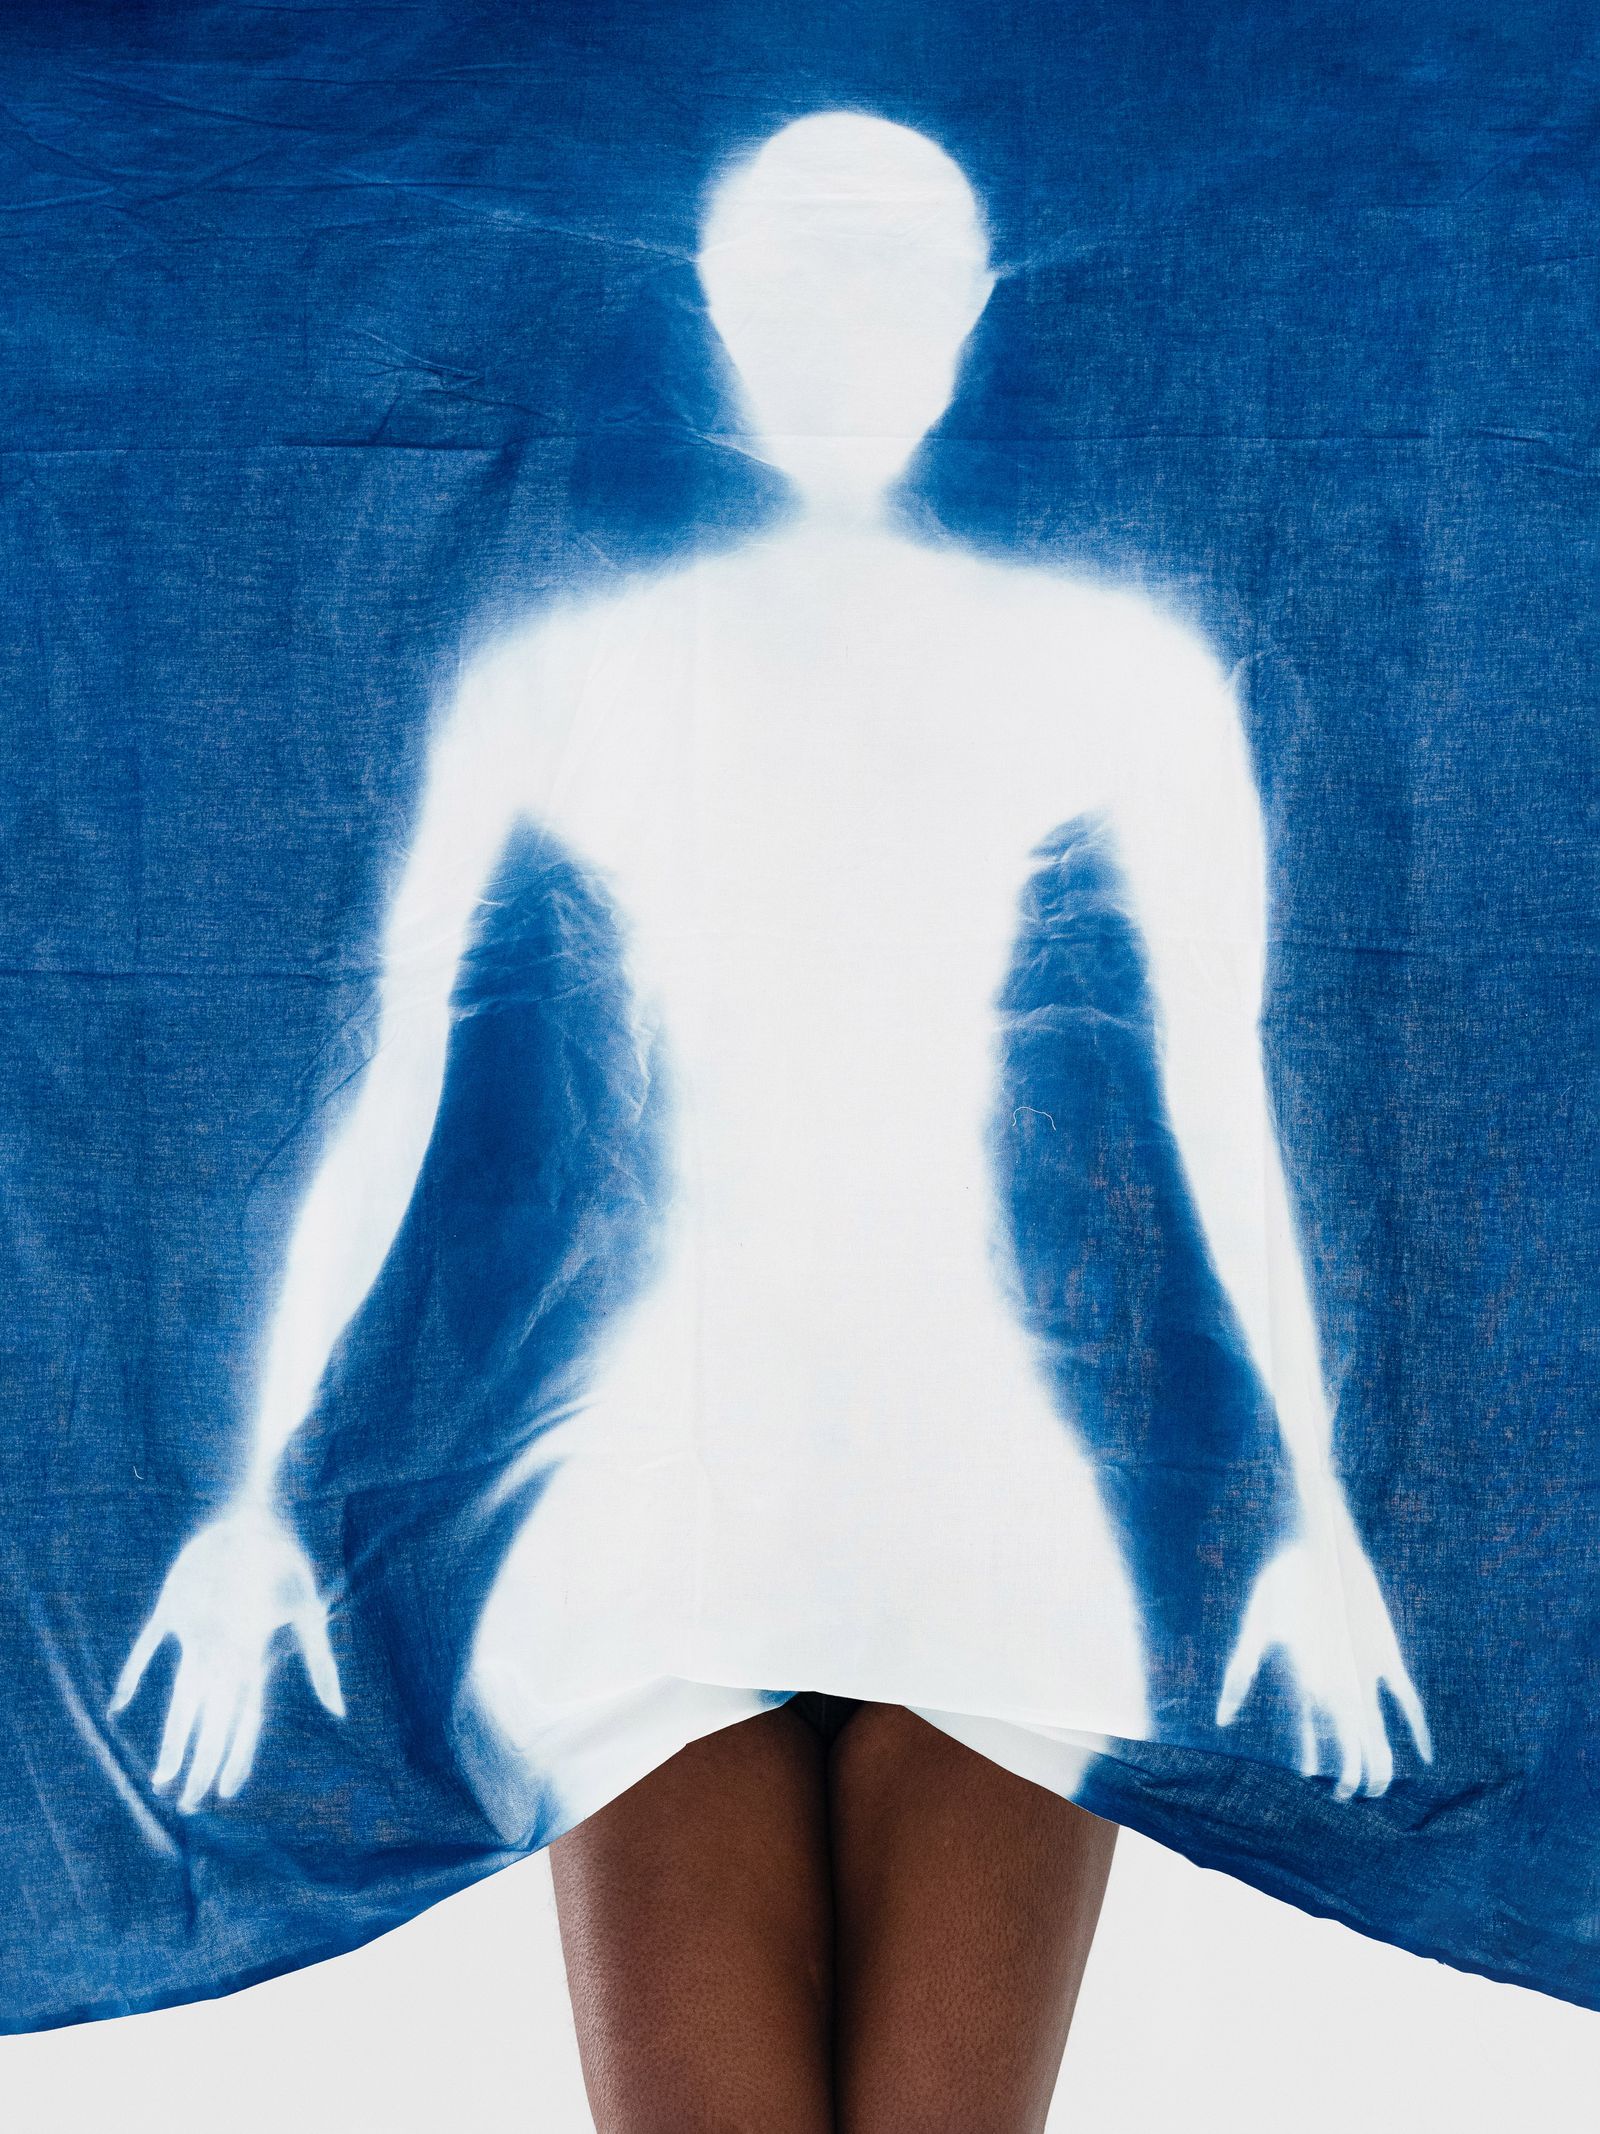 © Melanie Issaka - Blueprint 5: Black Skin, White mask In-camera Cyanotype collage, Giclée print, 40x30cm, 2021